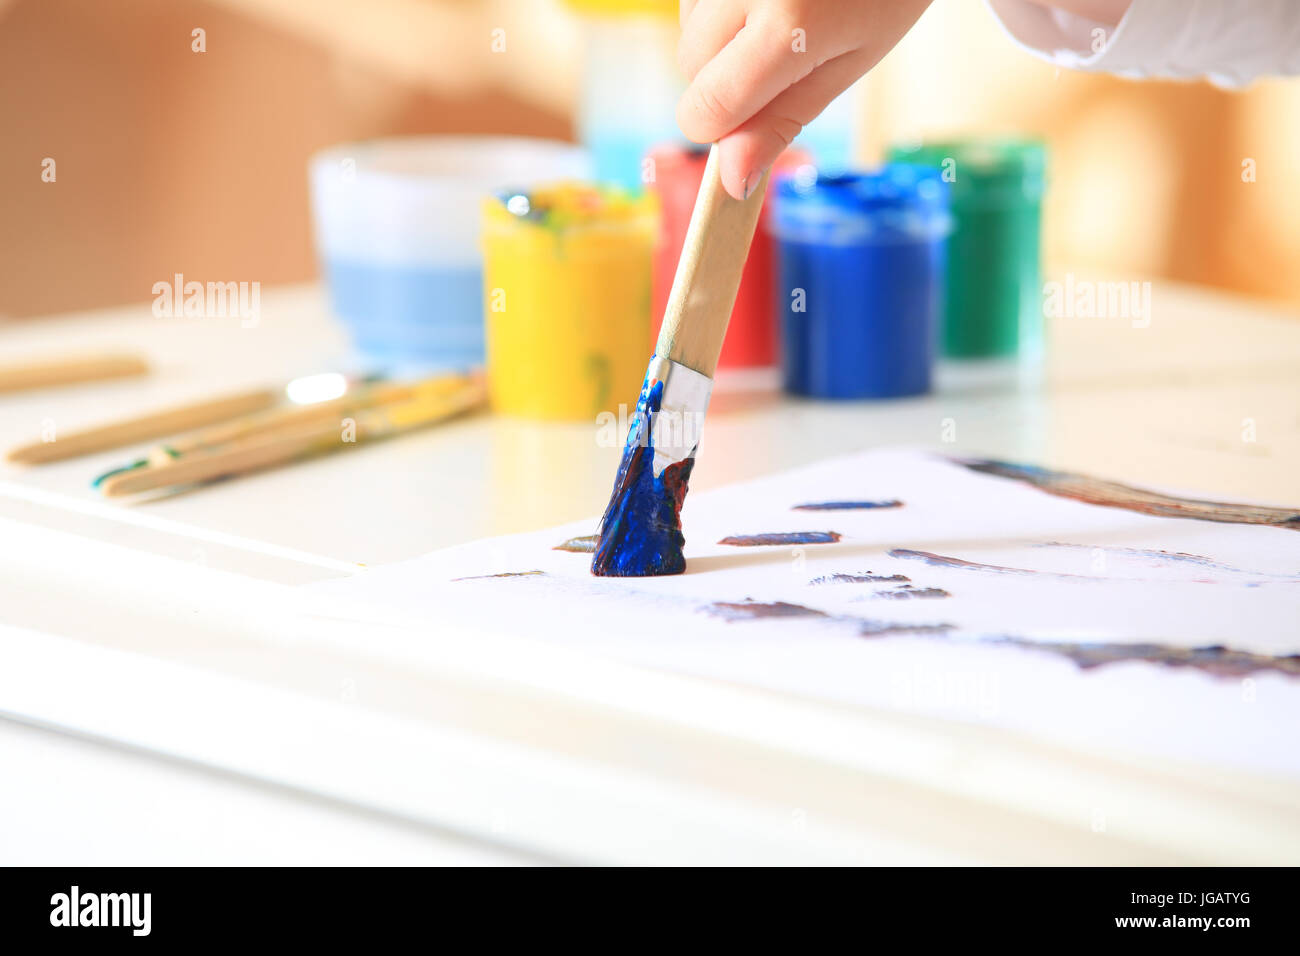 https://c8.alamy.com/comp/JGATYG/brush-in-blue-paint-on-colorful-paint-box-background-childrens-creativity-JGATYG.jpg